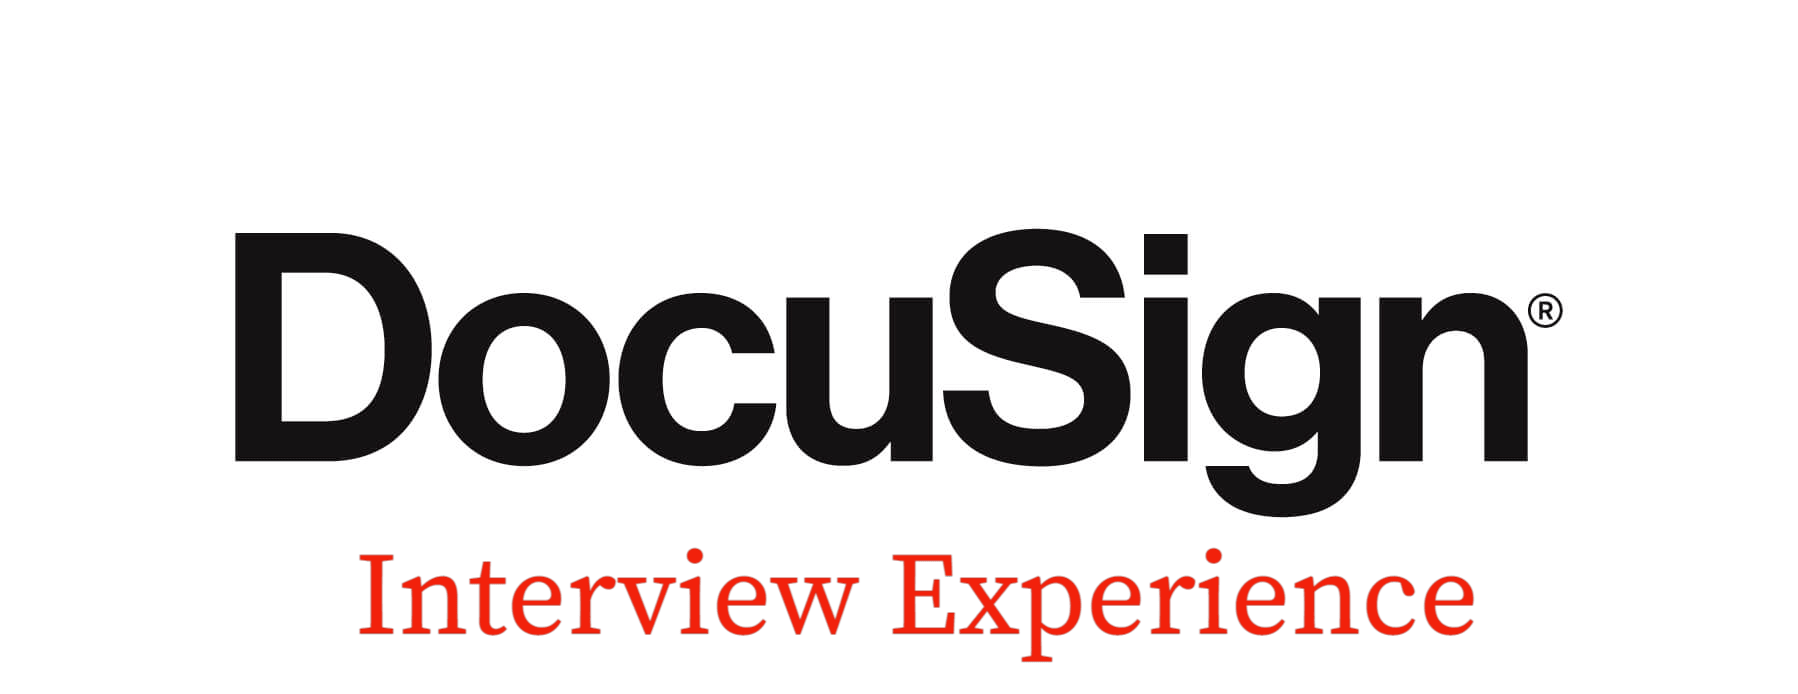 DocuSign intervjufrågor